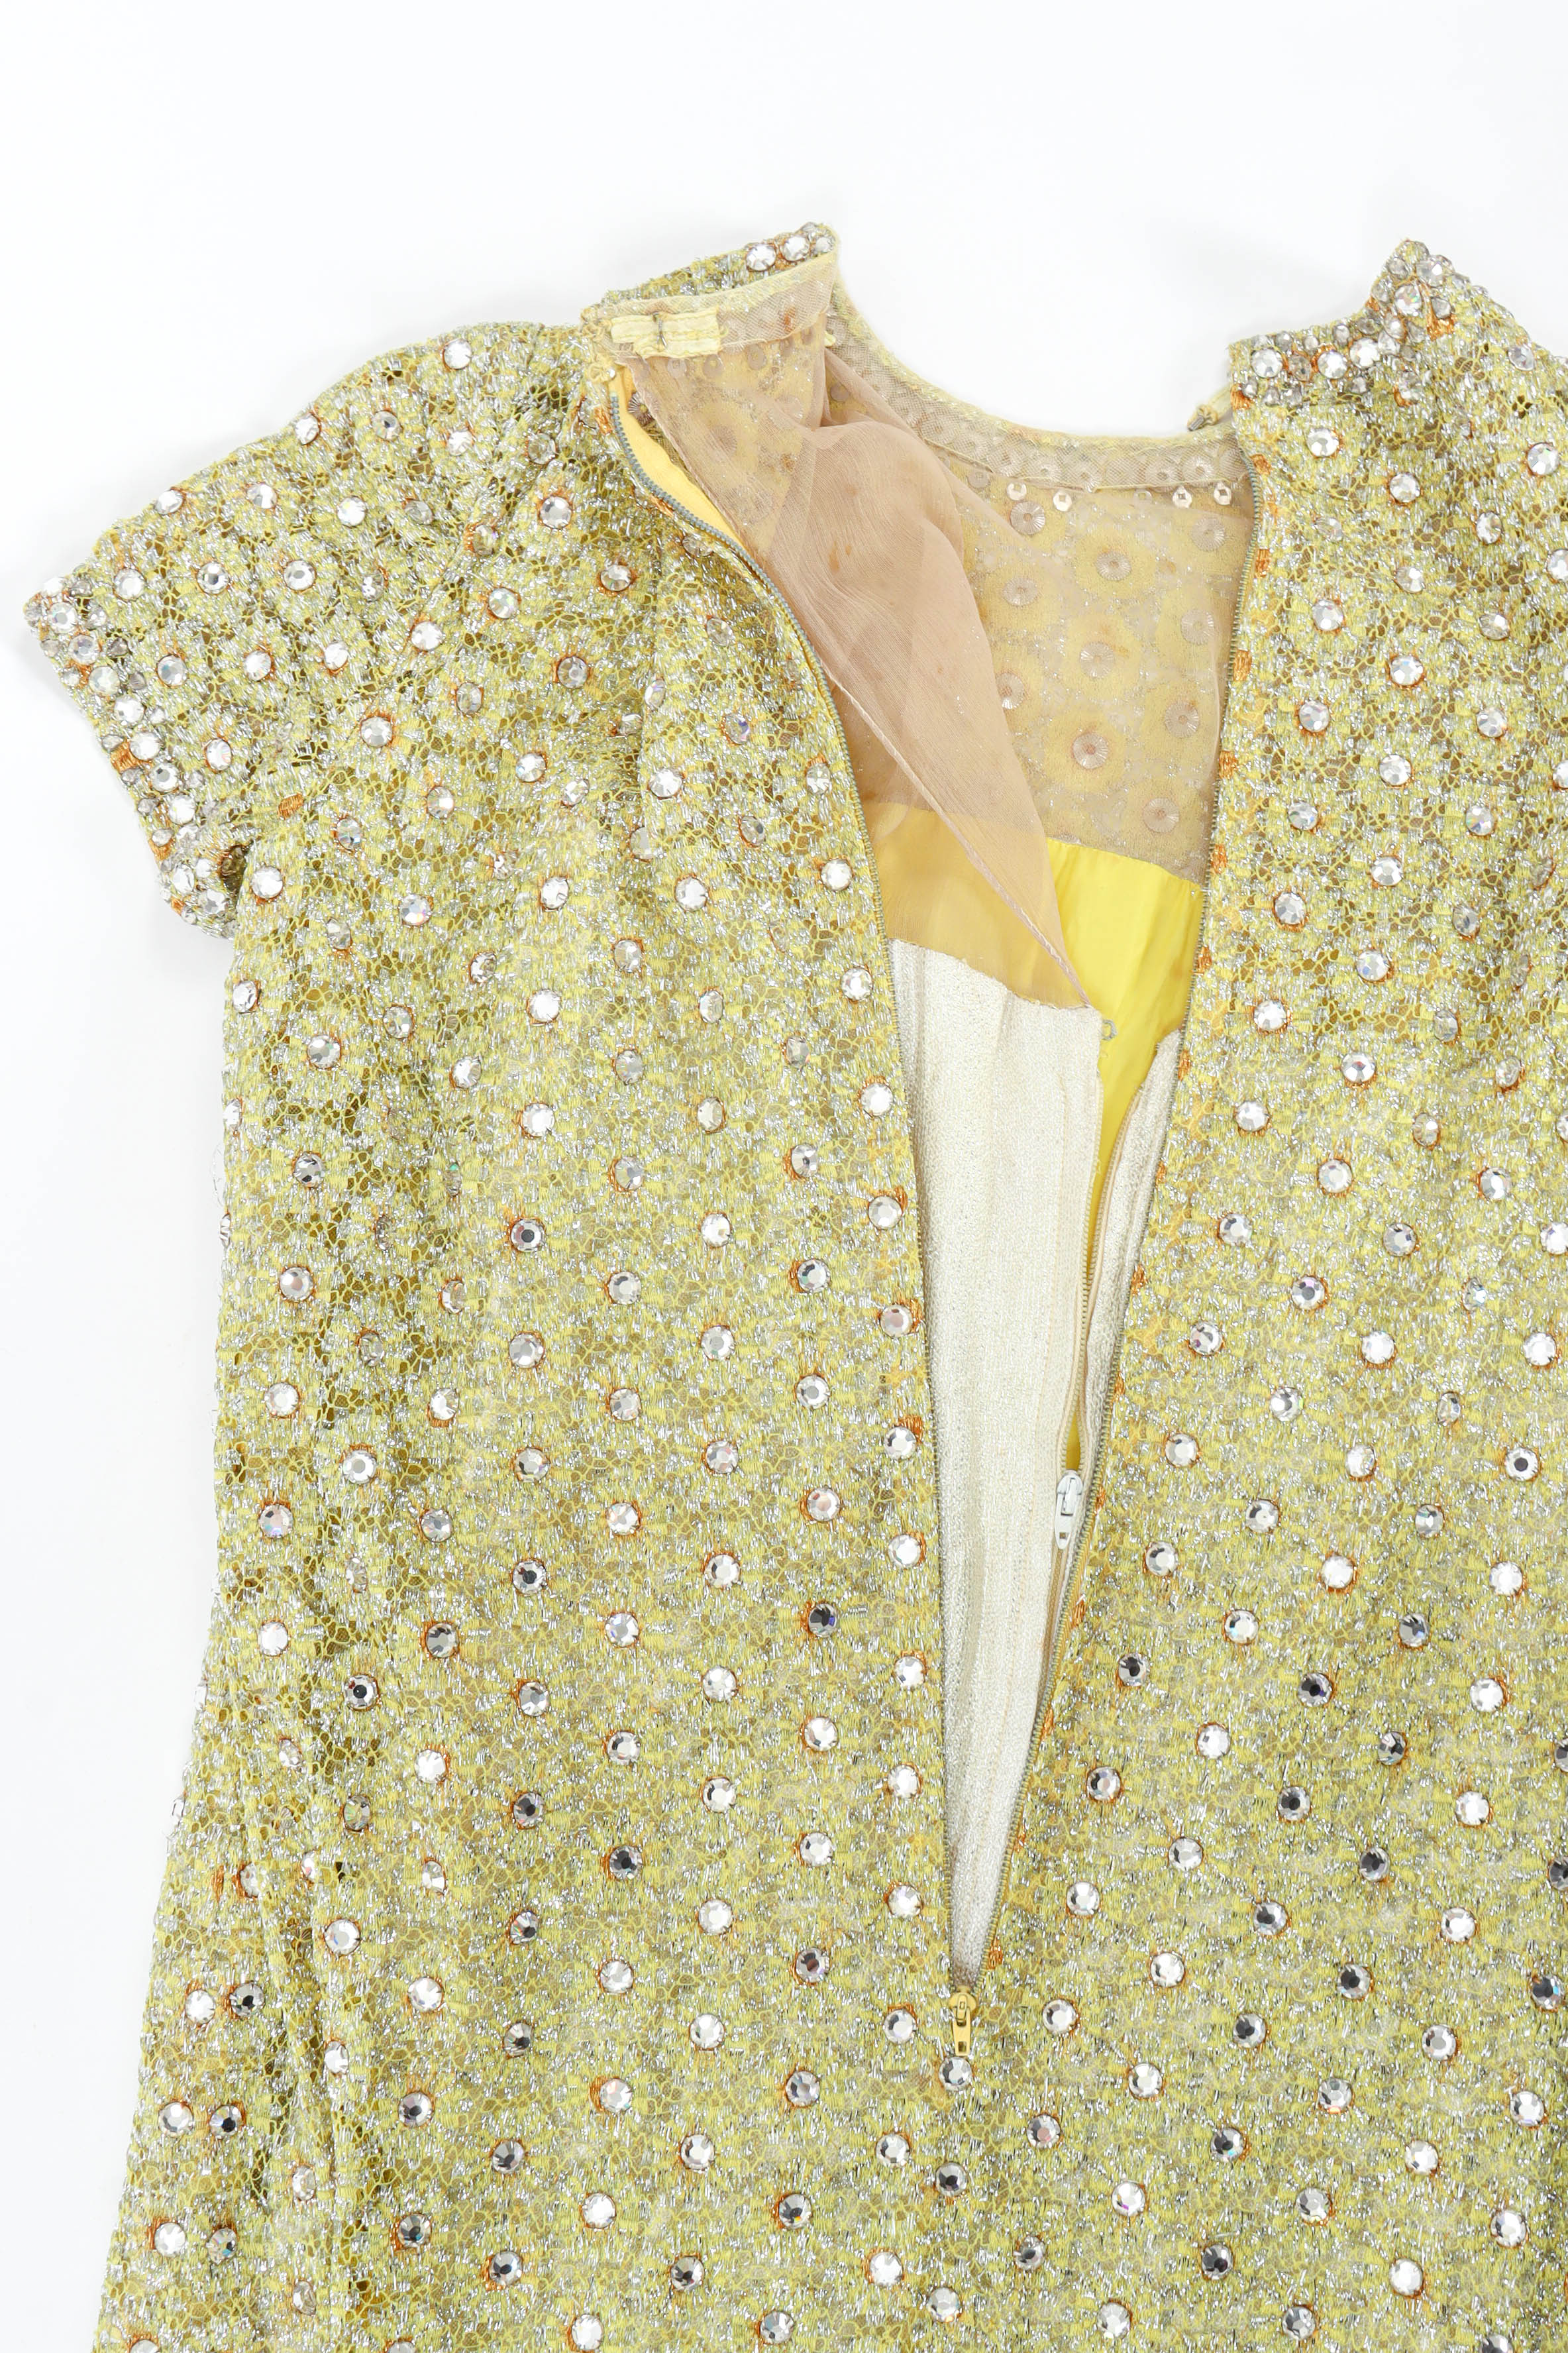 Vintage Bonwit Teller Rhinestone Dotted Dress back center dress detail @ Recess LA